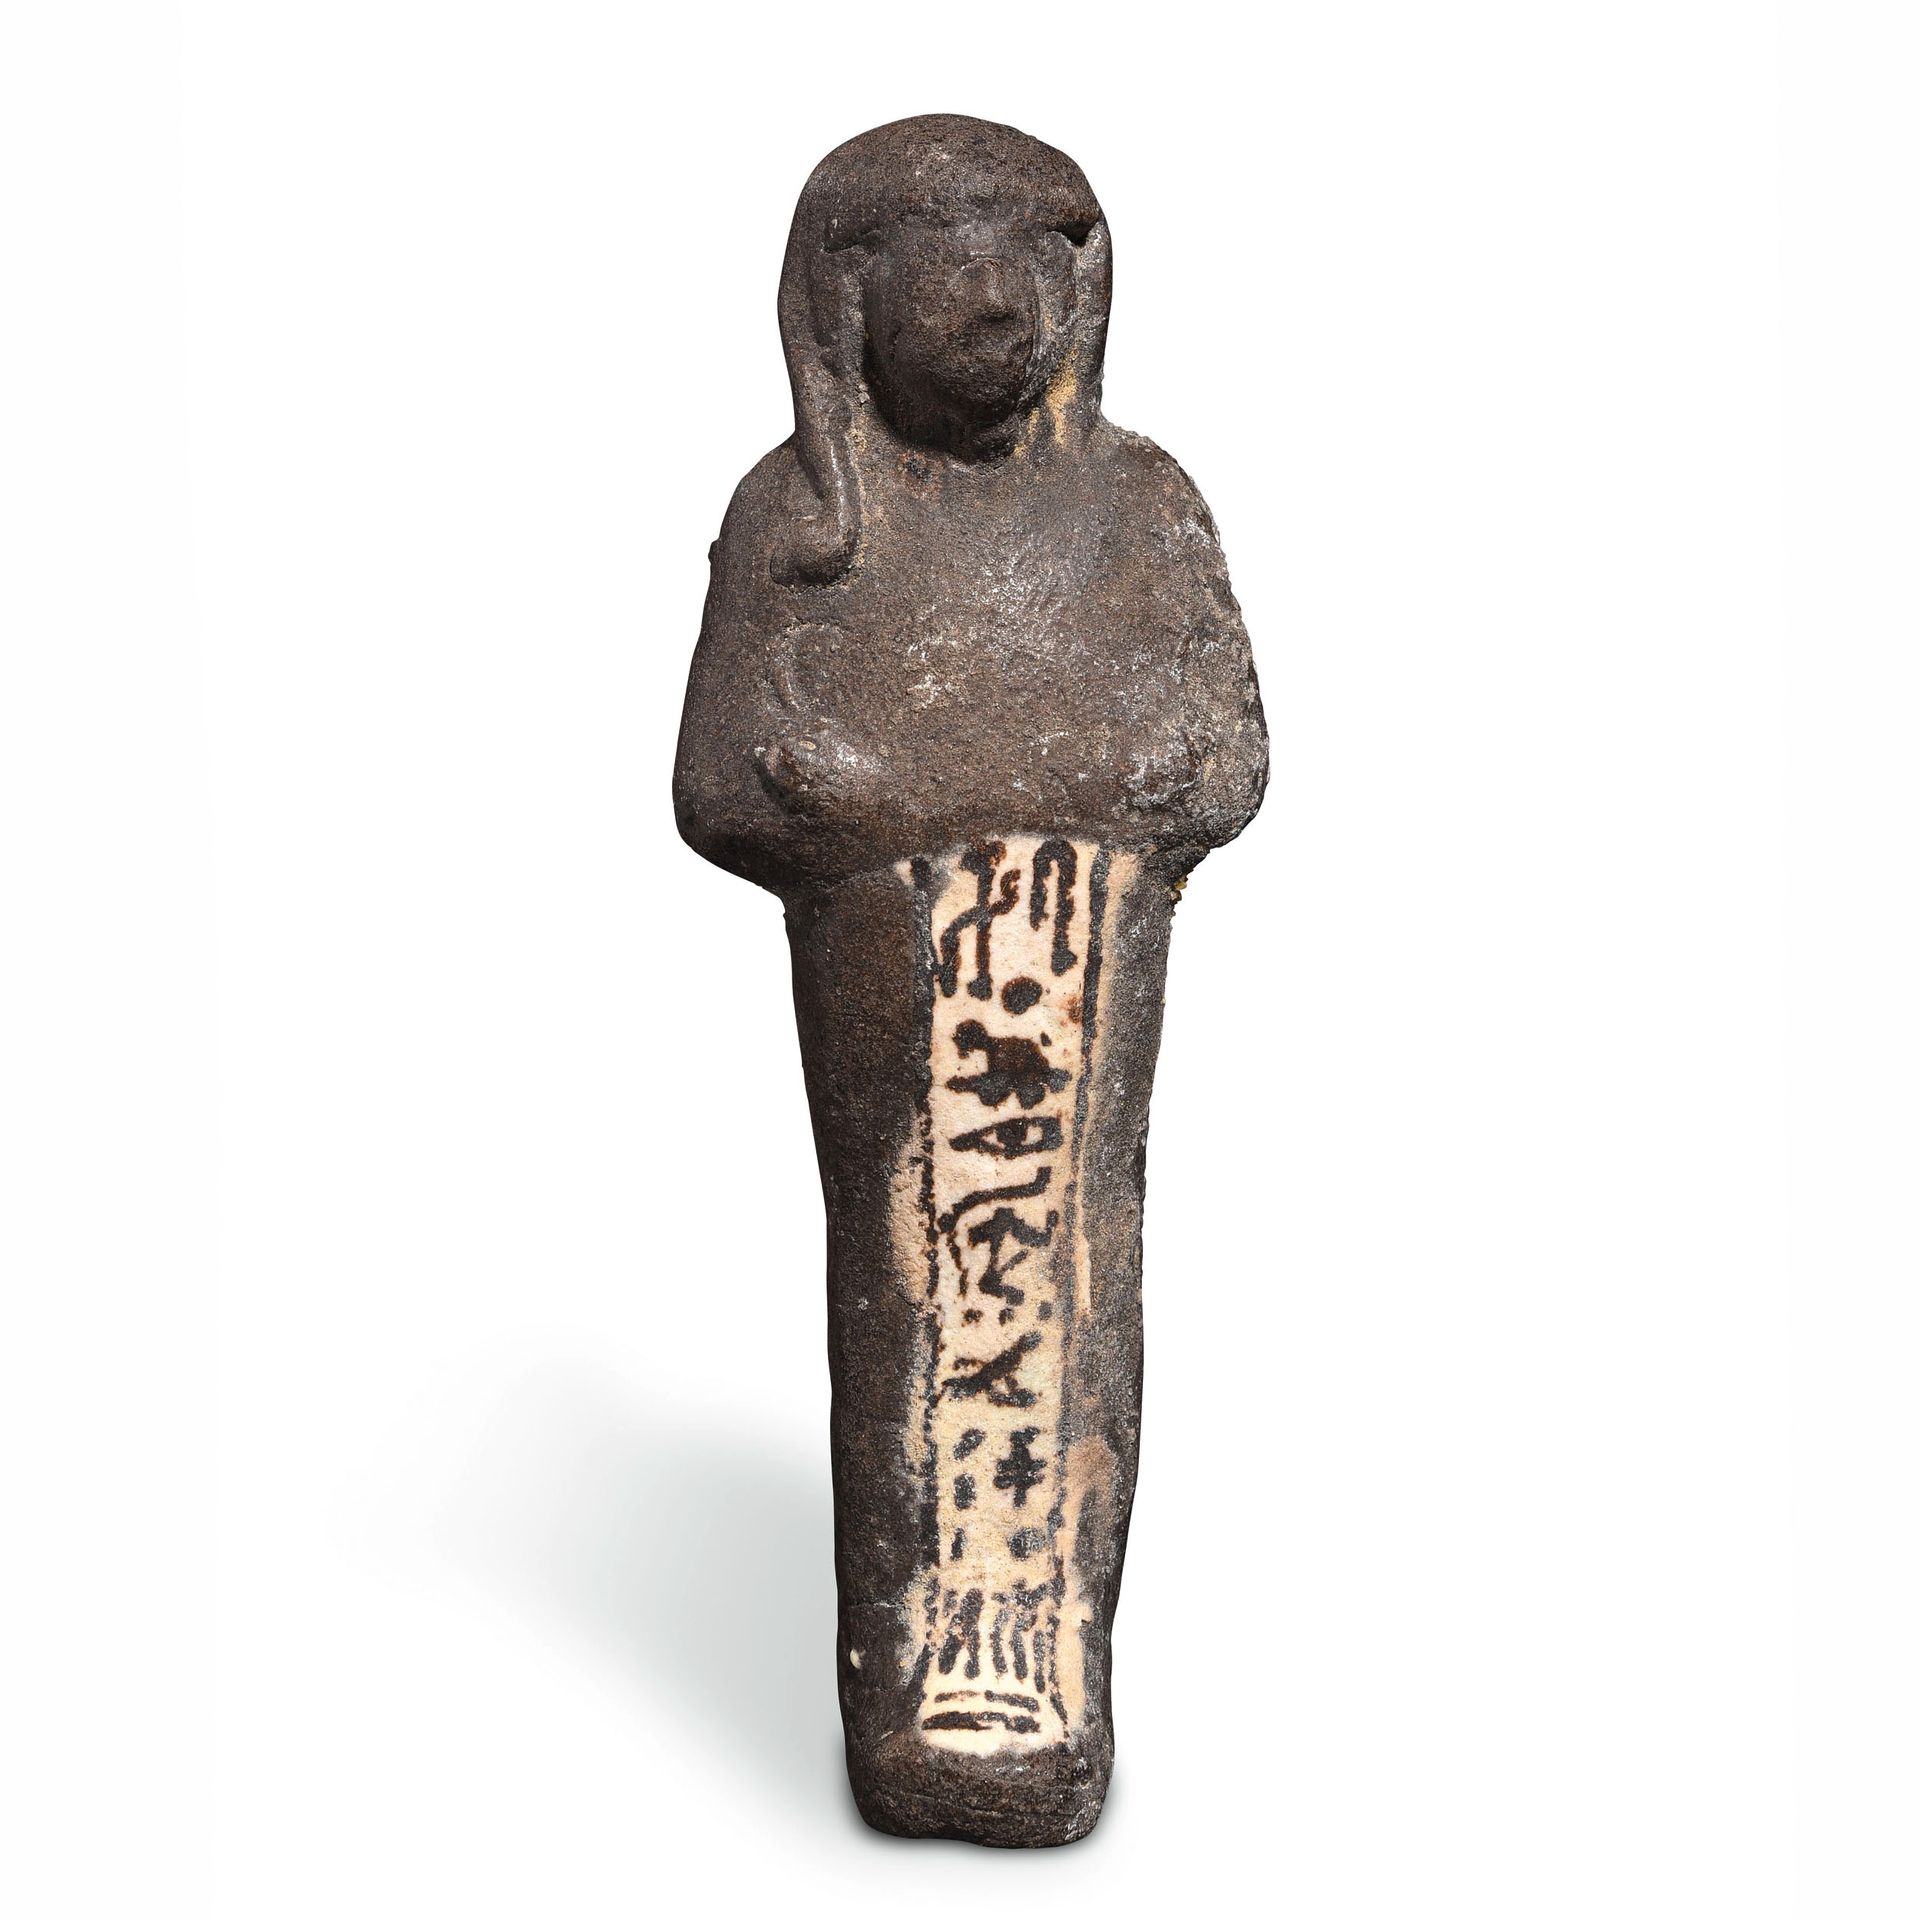 Null OUSHABTI EN NOMBRE DE KHAEMWASET

Egipto, Reino Nuevo, XIX dinastía, siglo &hellip;